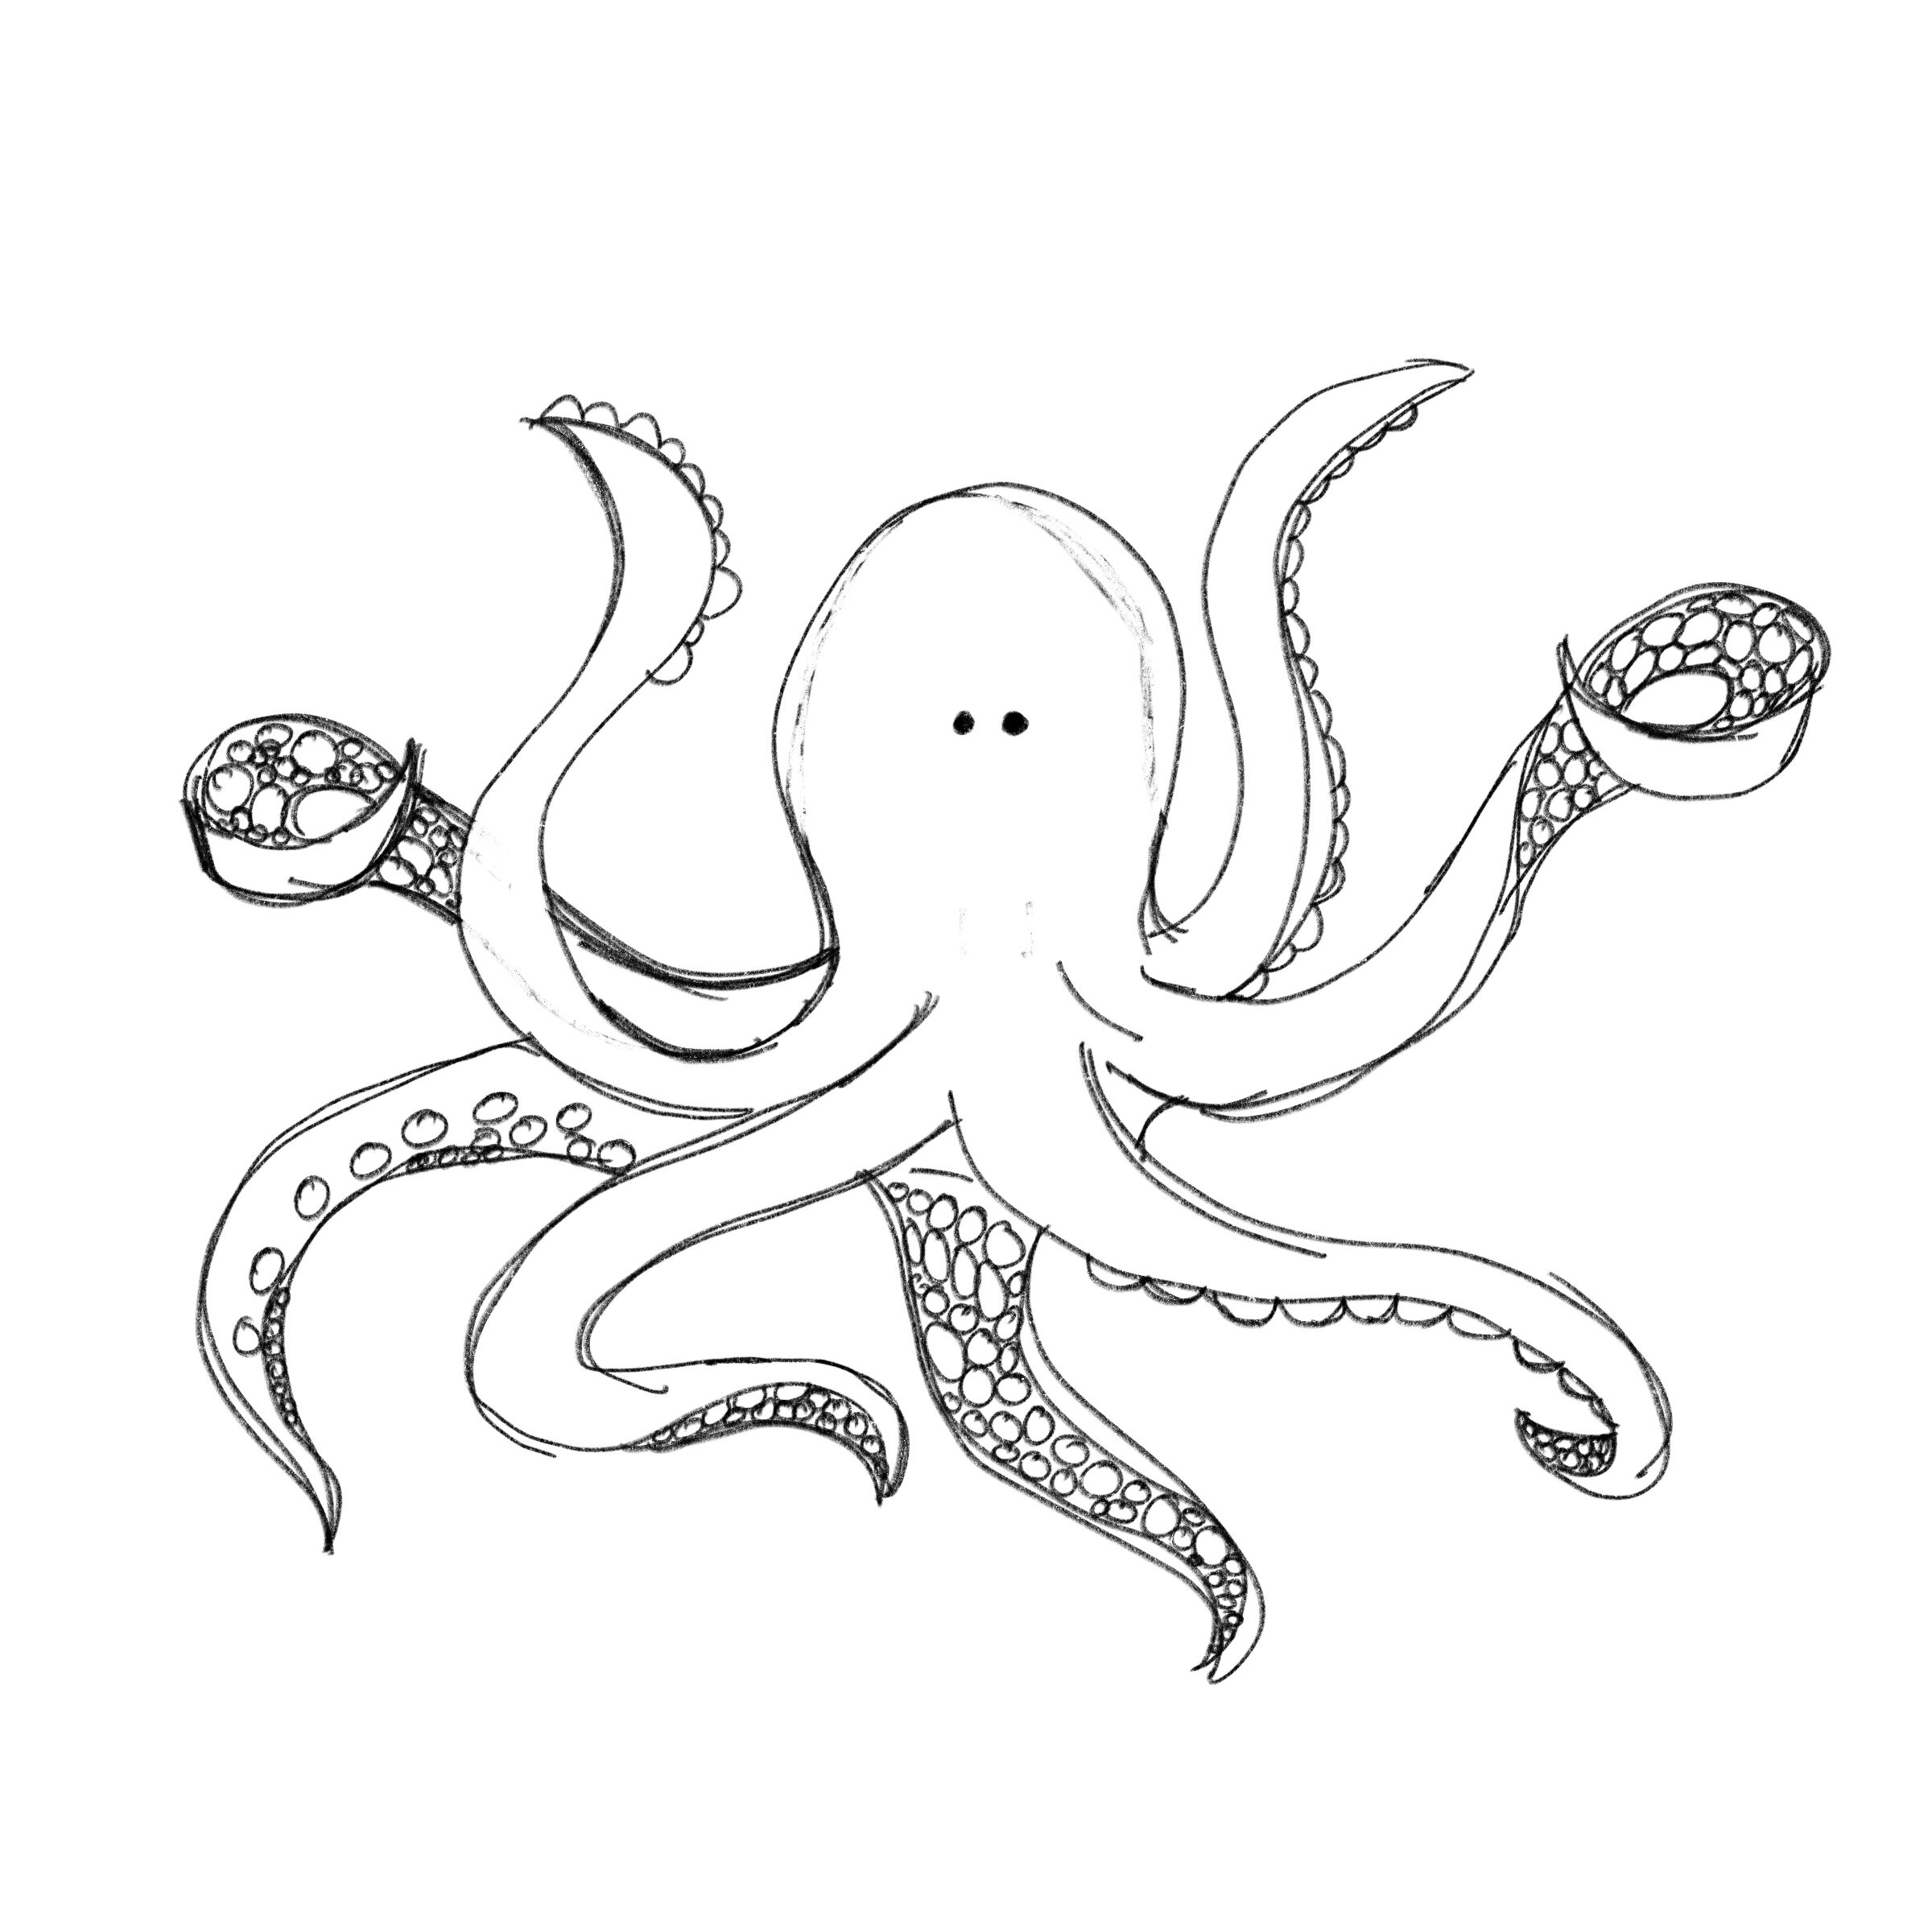 Octopus rough.jpg